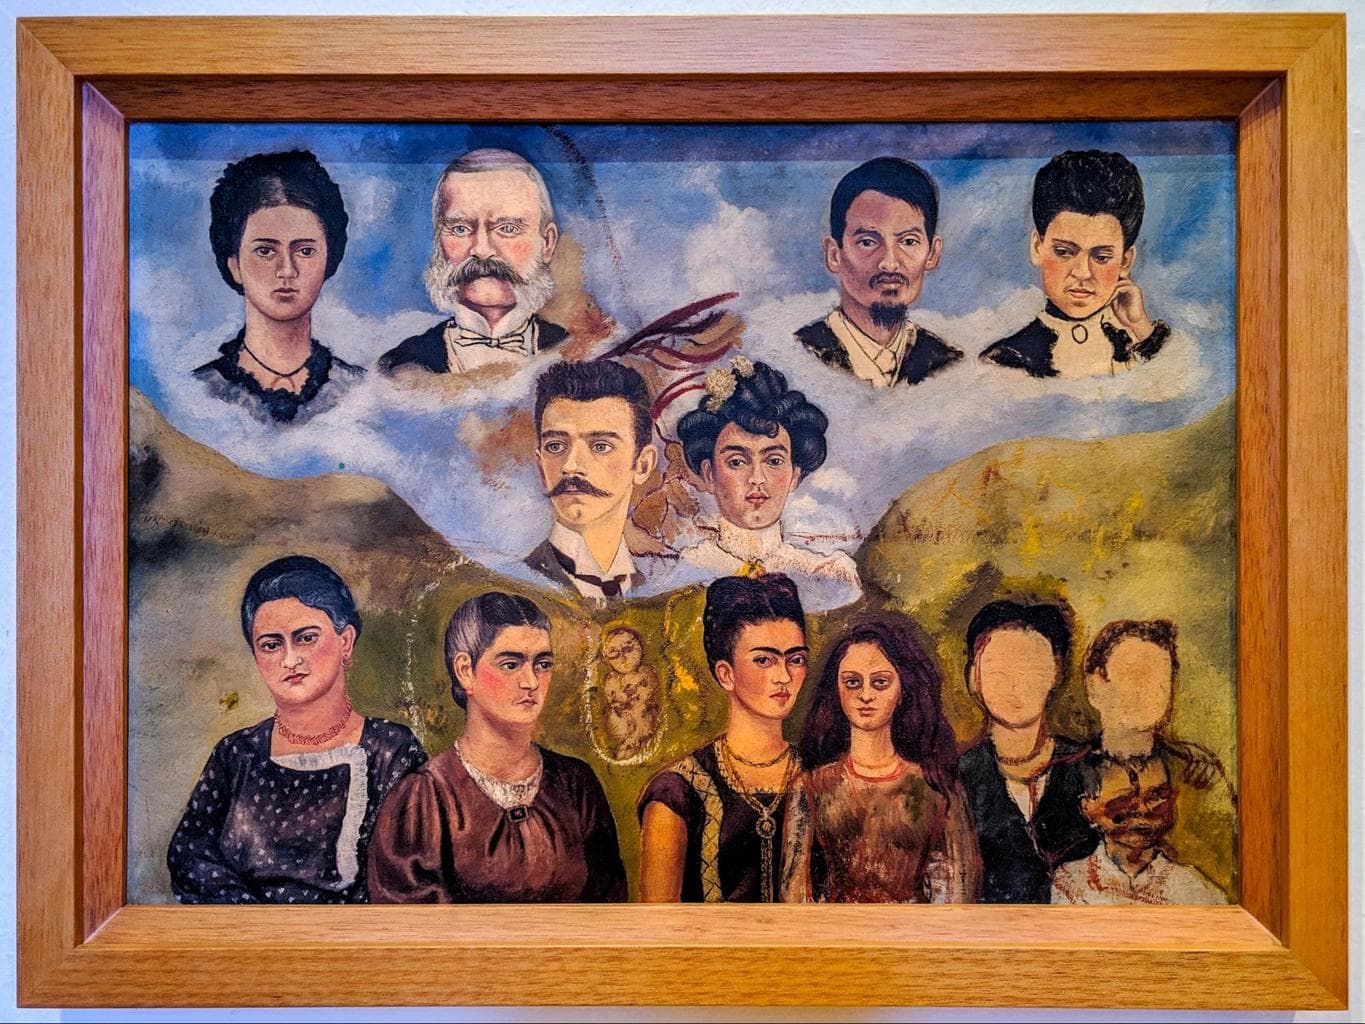 Some of Frida Kahlo’s paintings at La Casa Azul